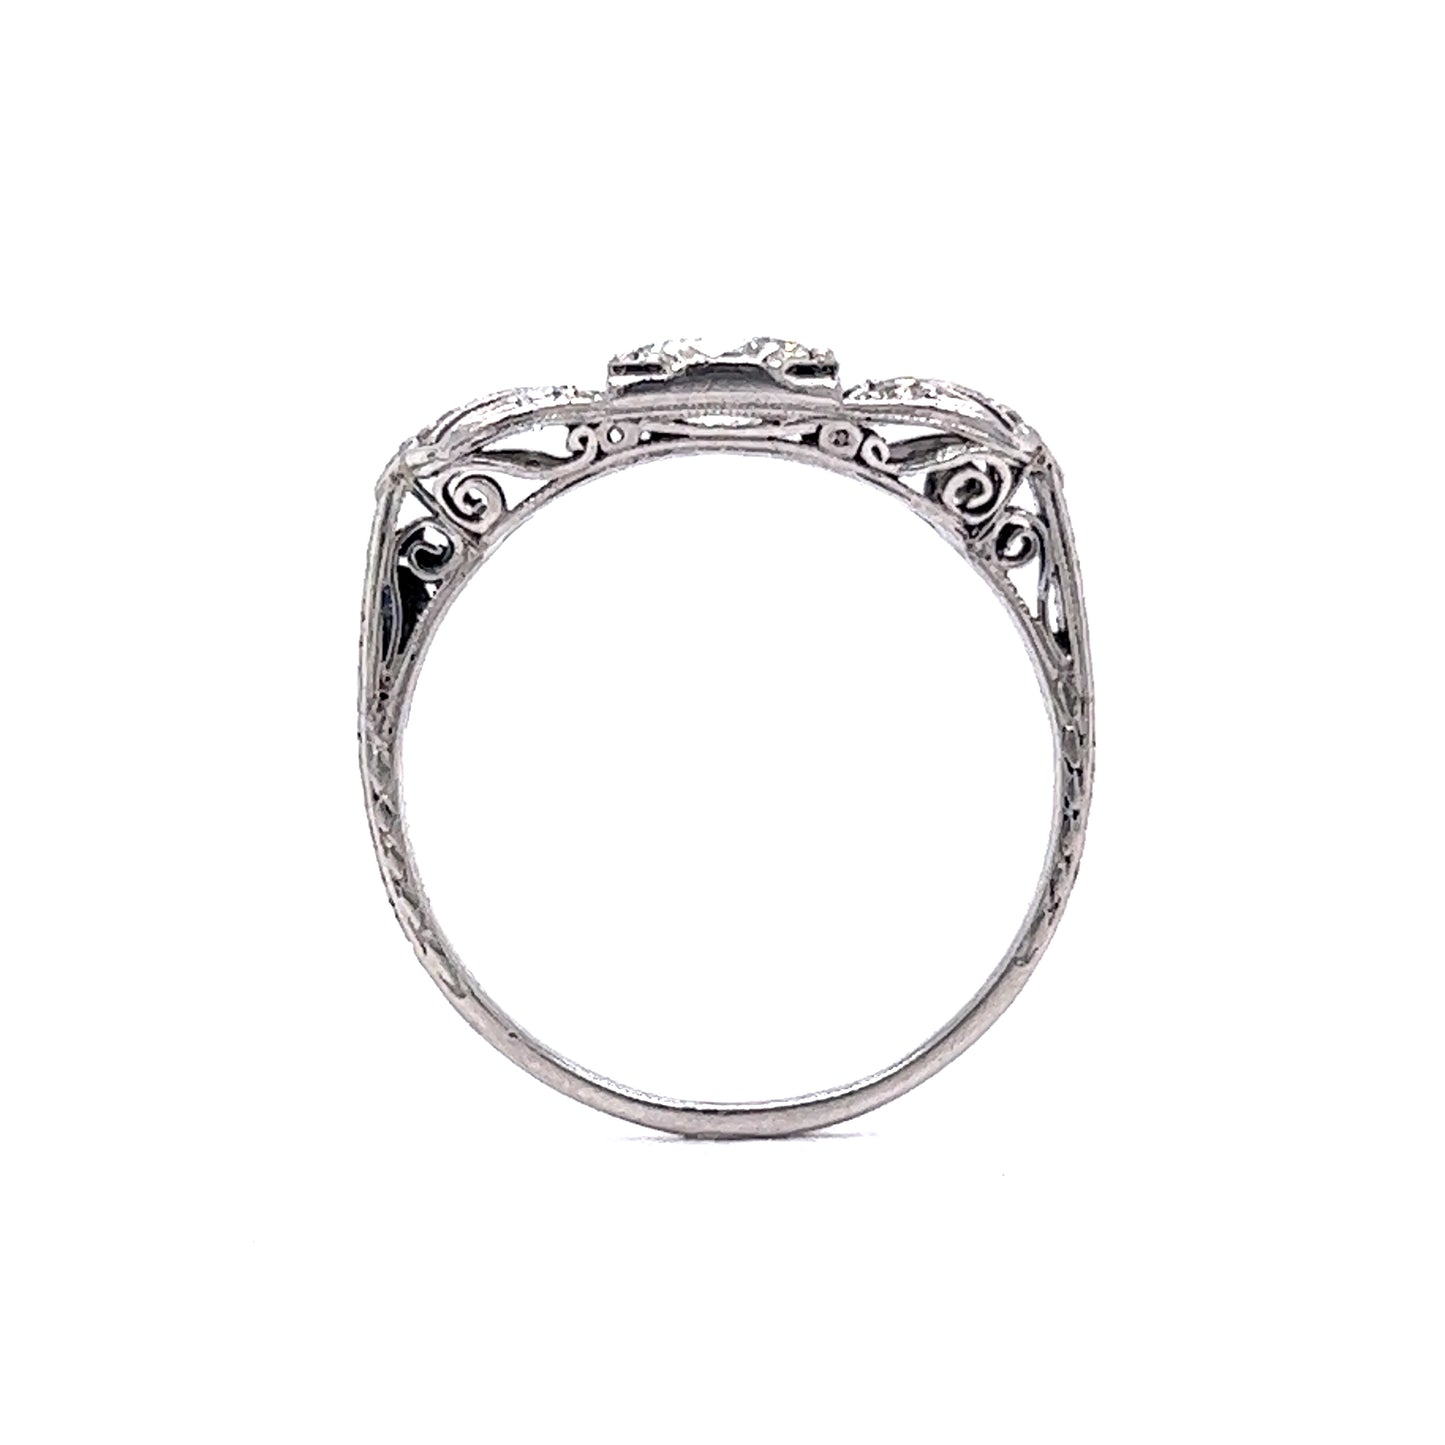 Vintage Art Deco Tiffany & Co Engagement Ring in Platinum